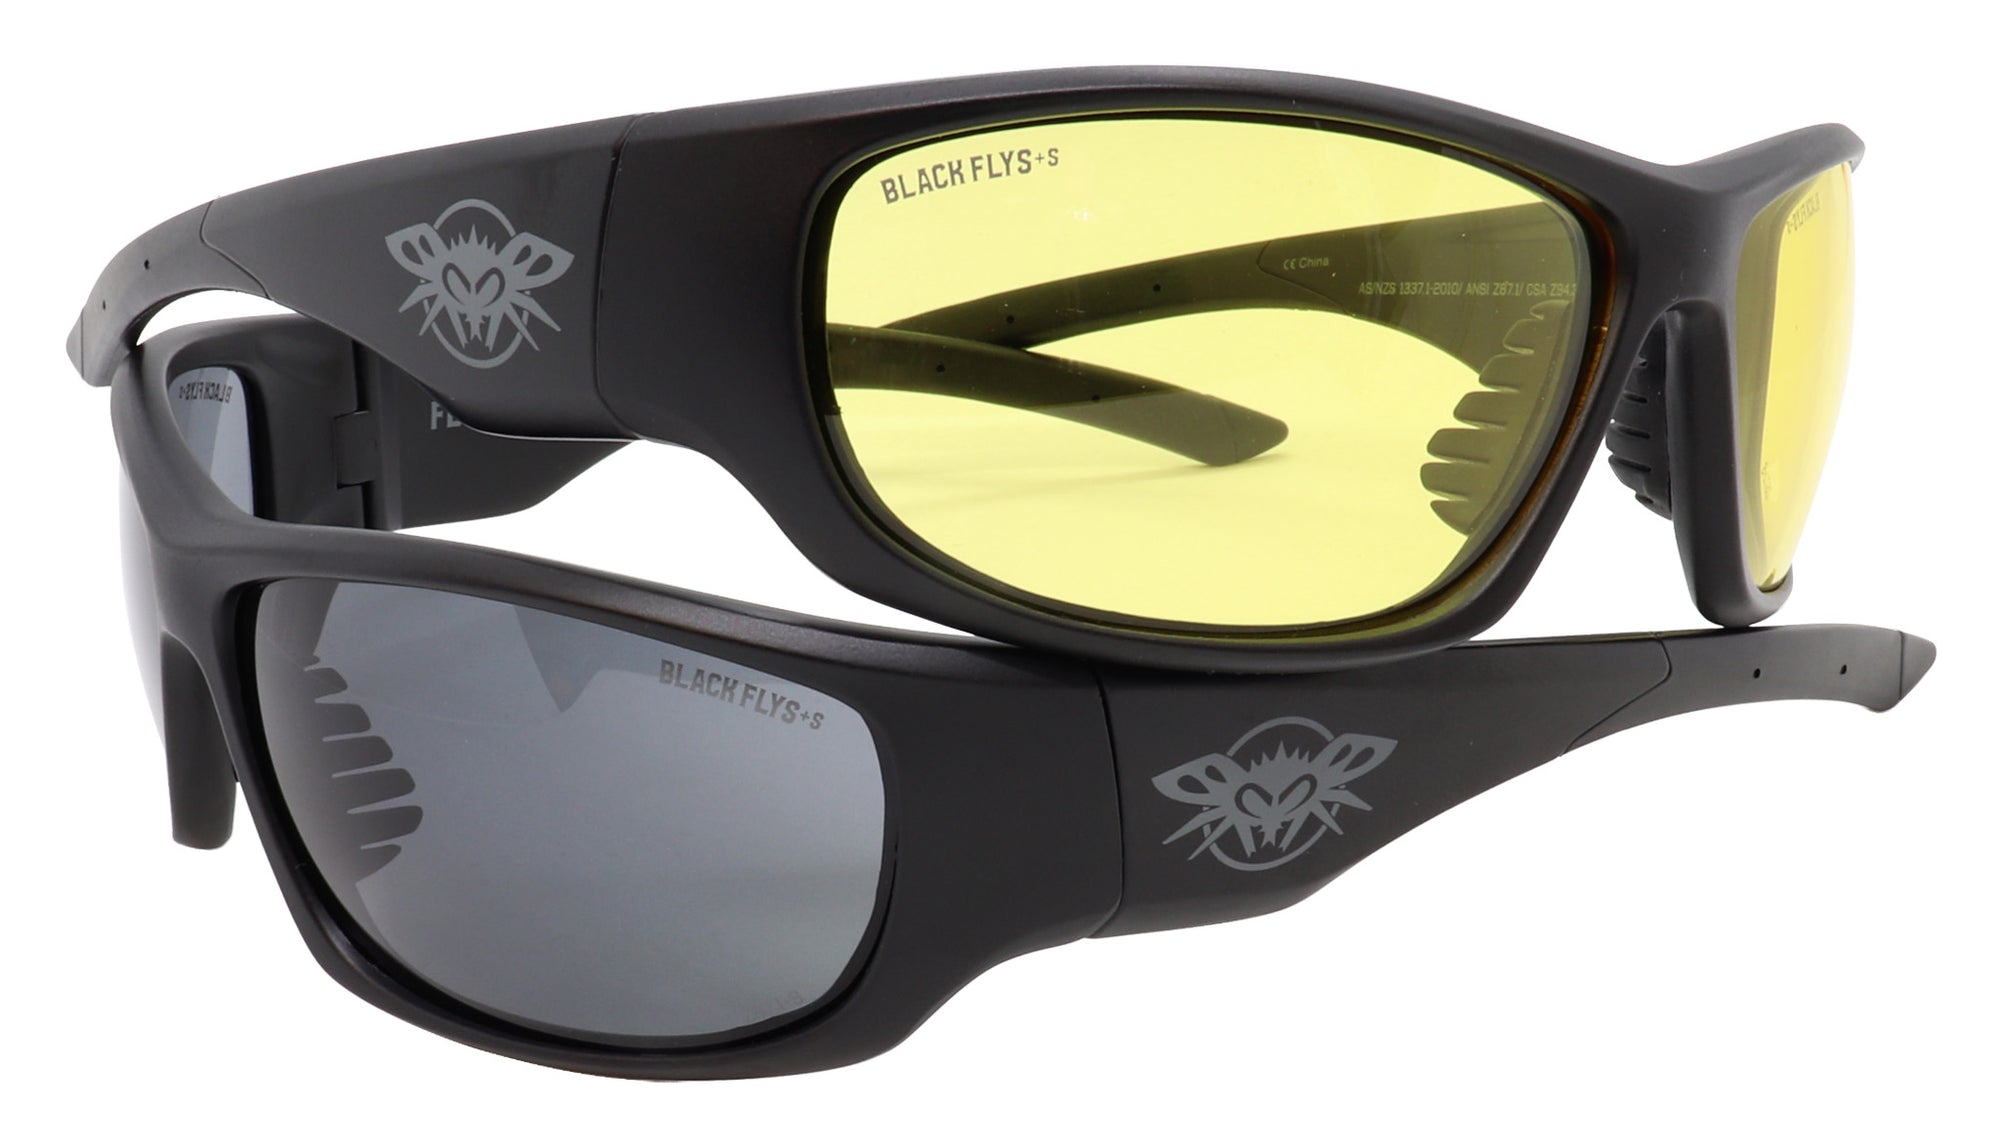 Evasion Folding Sunglasses Z0209U Black